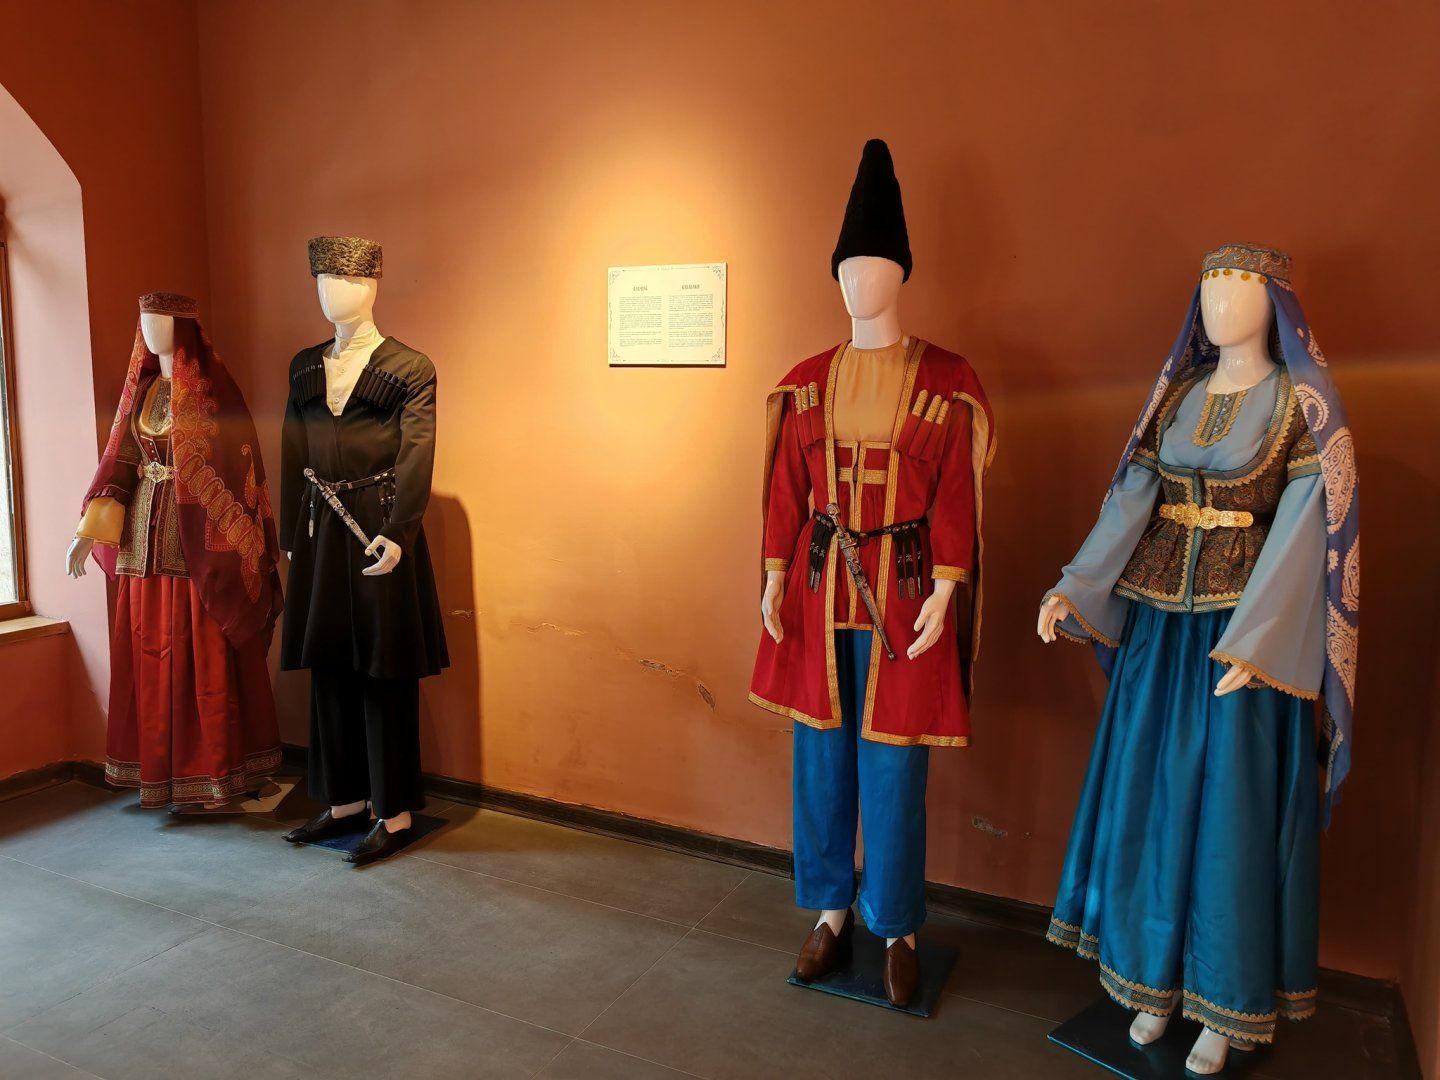 Garabagh traditional clothing on display in Shusha [PHOTOS]